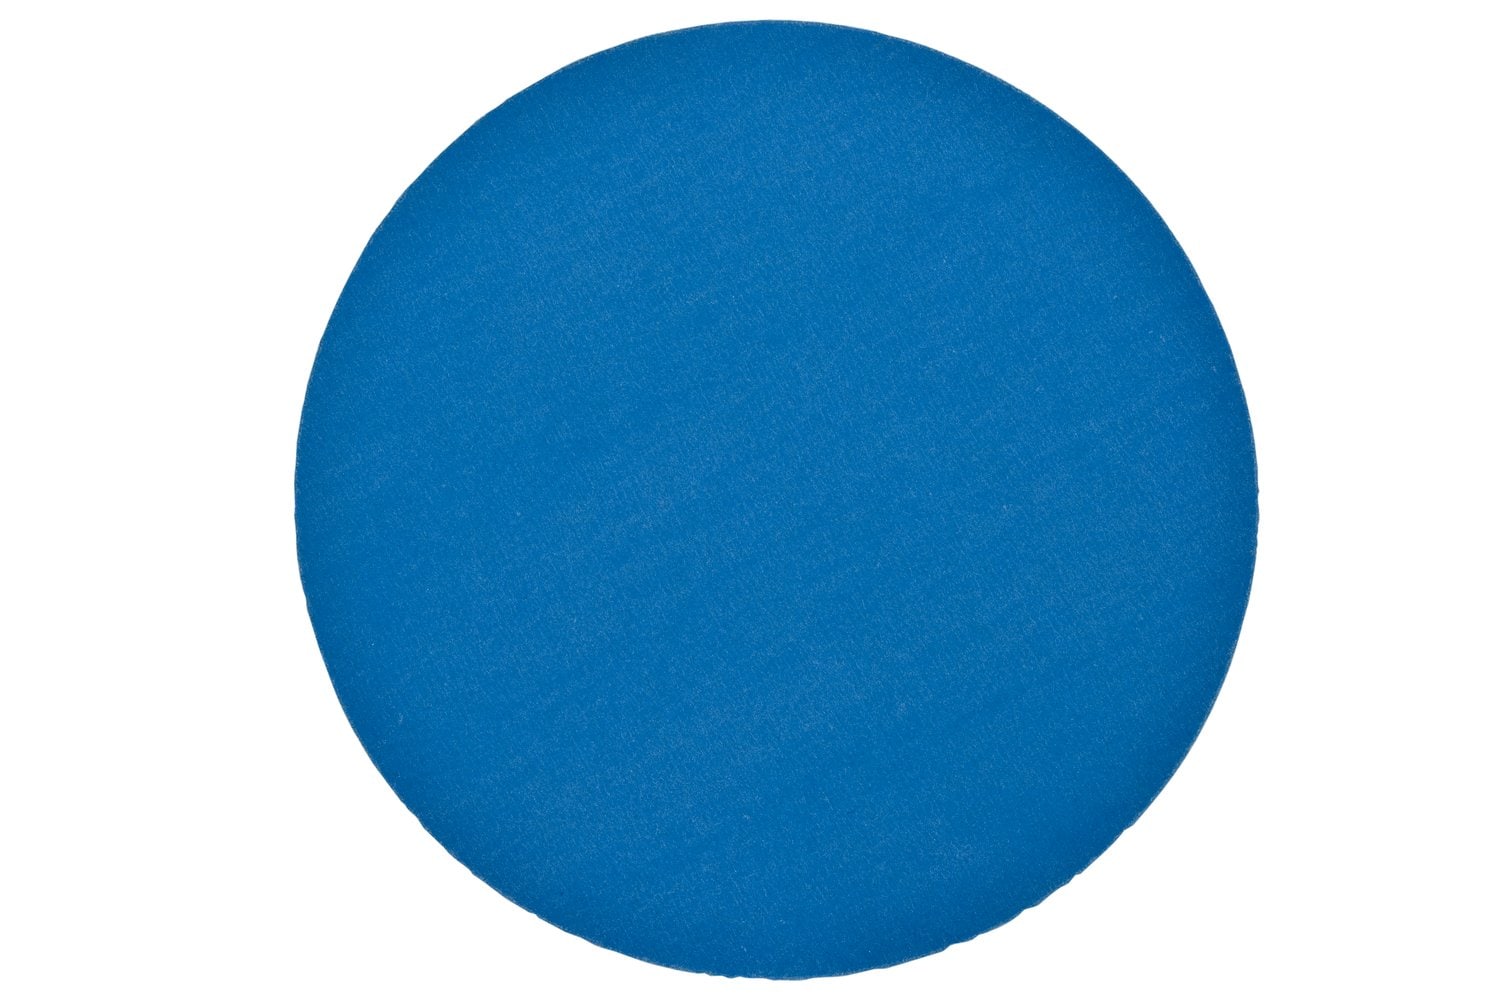 7100199653 - 3M Hookit Blue Abrasive Disc, 36260, 5 in, 400 grade, No Hole, 50 discs per carton, 4 cartons per case